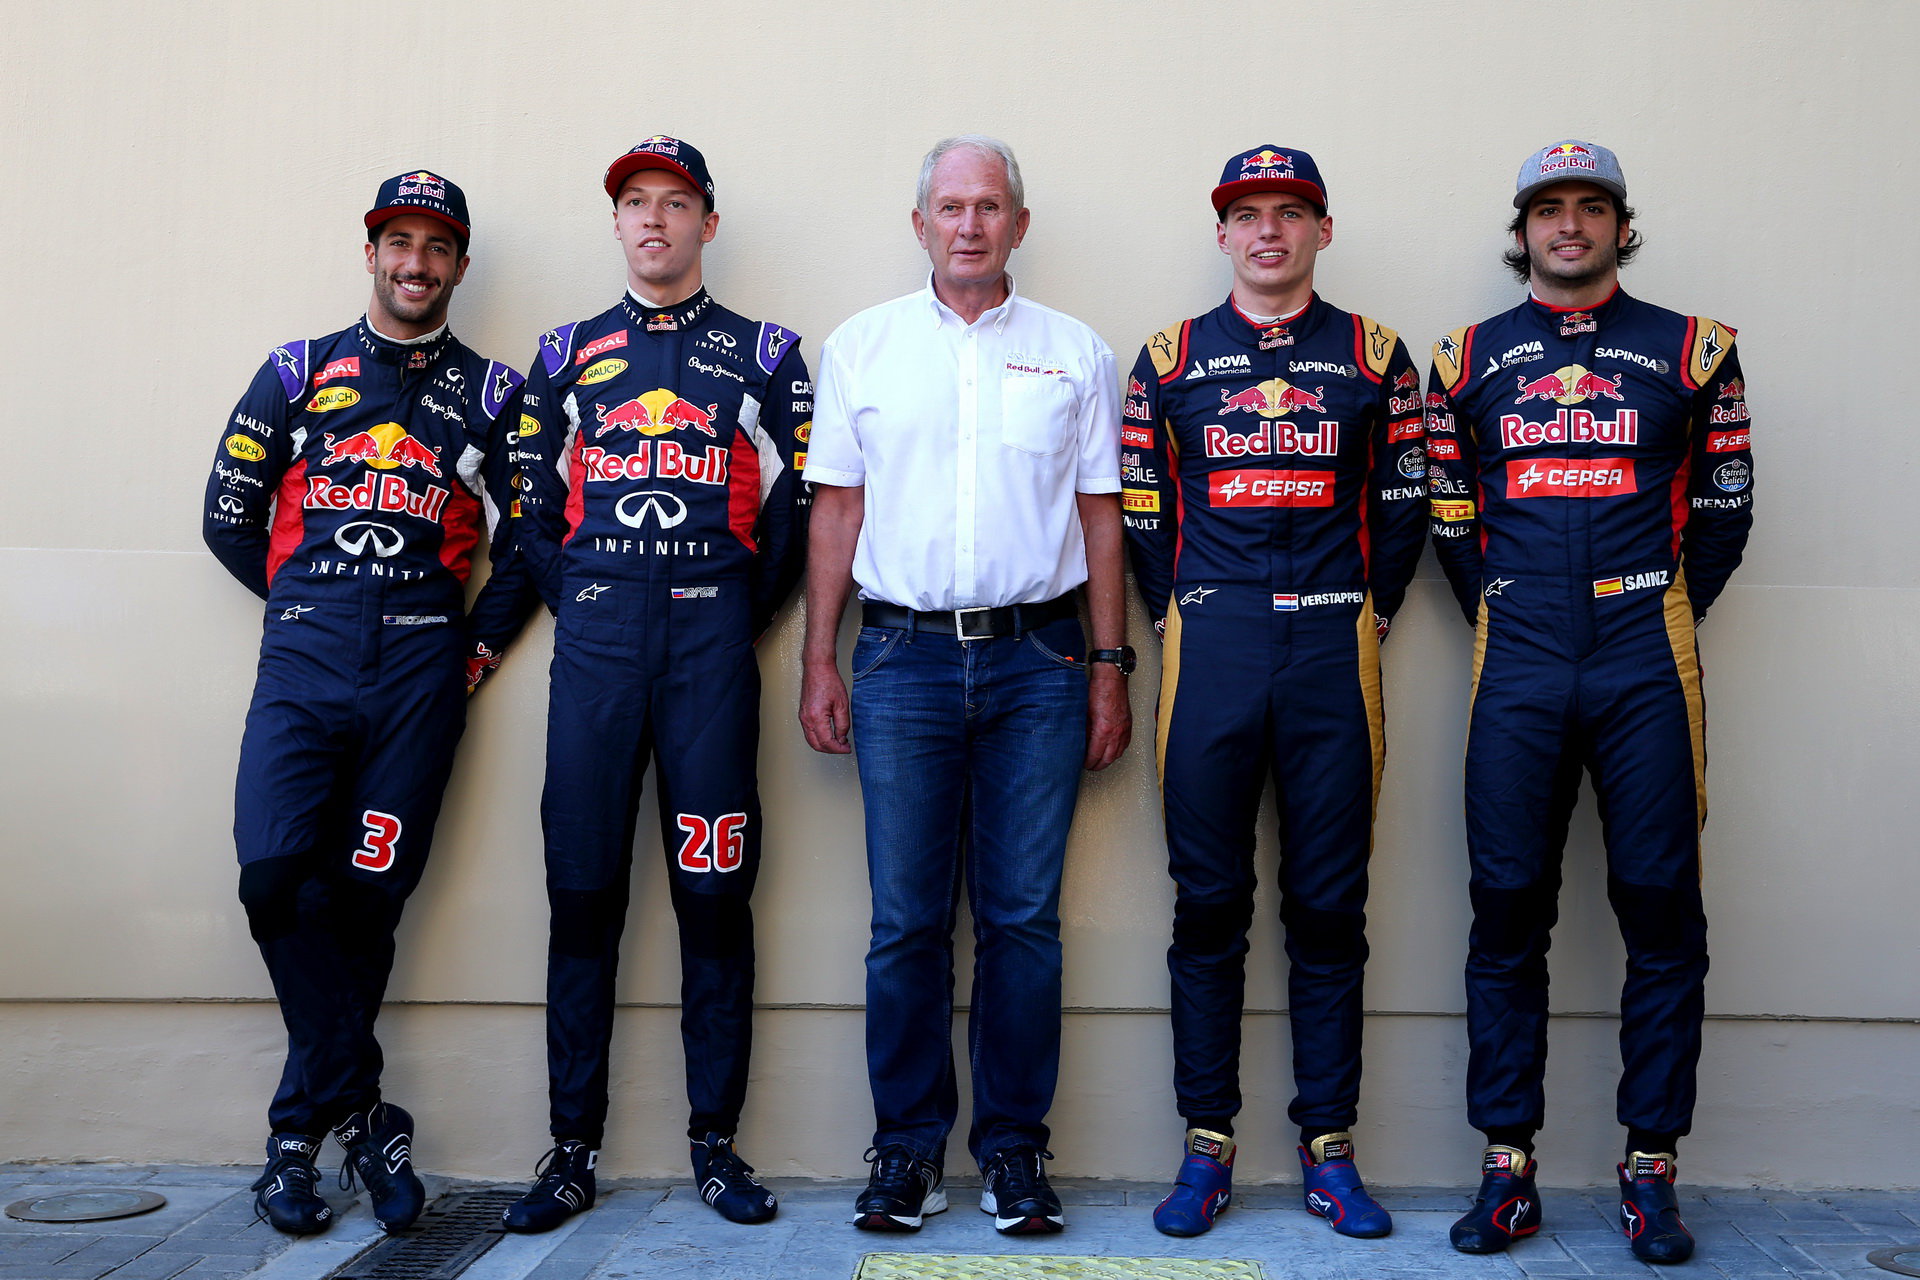 Daniel Ricciardo, Daniil Kvjat, Helmut Marko, Max Verstappen a Carlos Sainz v Abú Zabí